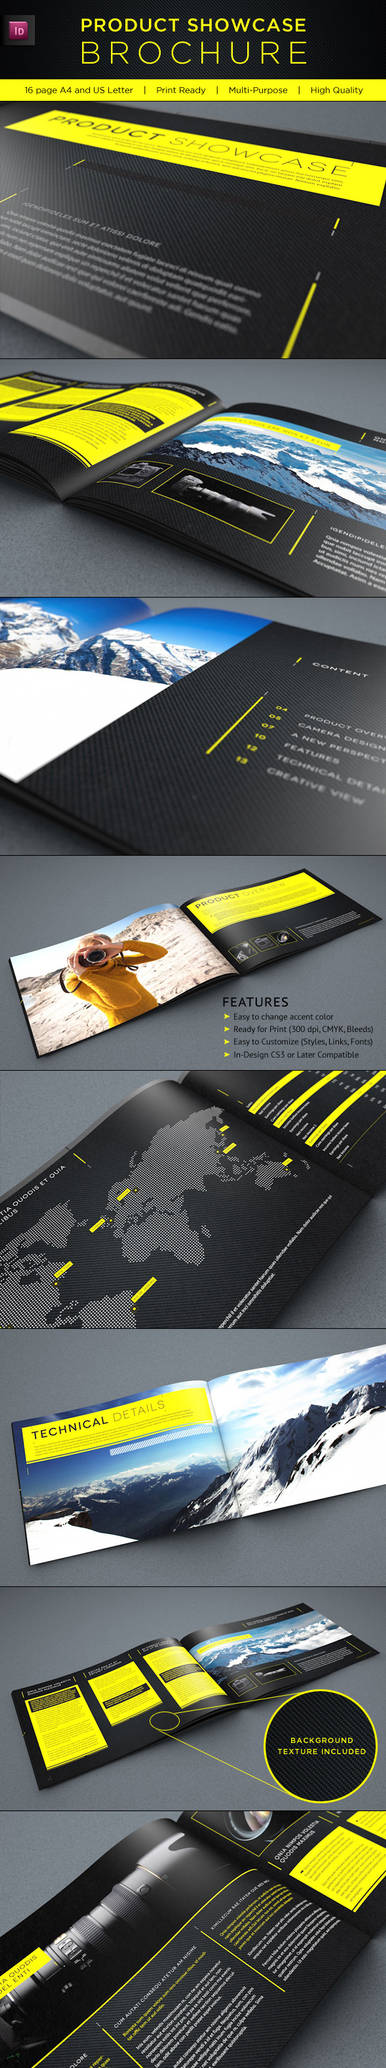 Product Showcase Brochure